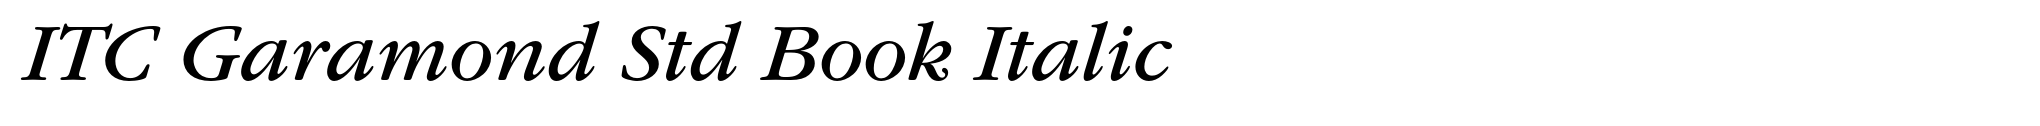 ITC Garamond Std Book Italic image